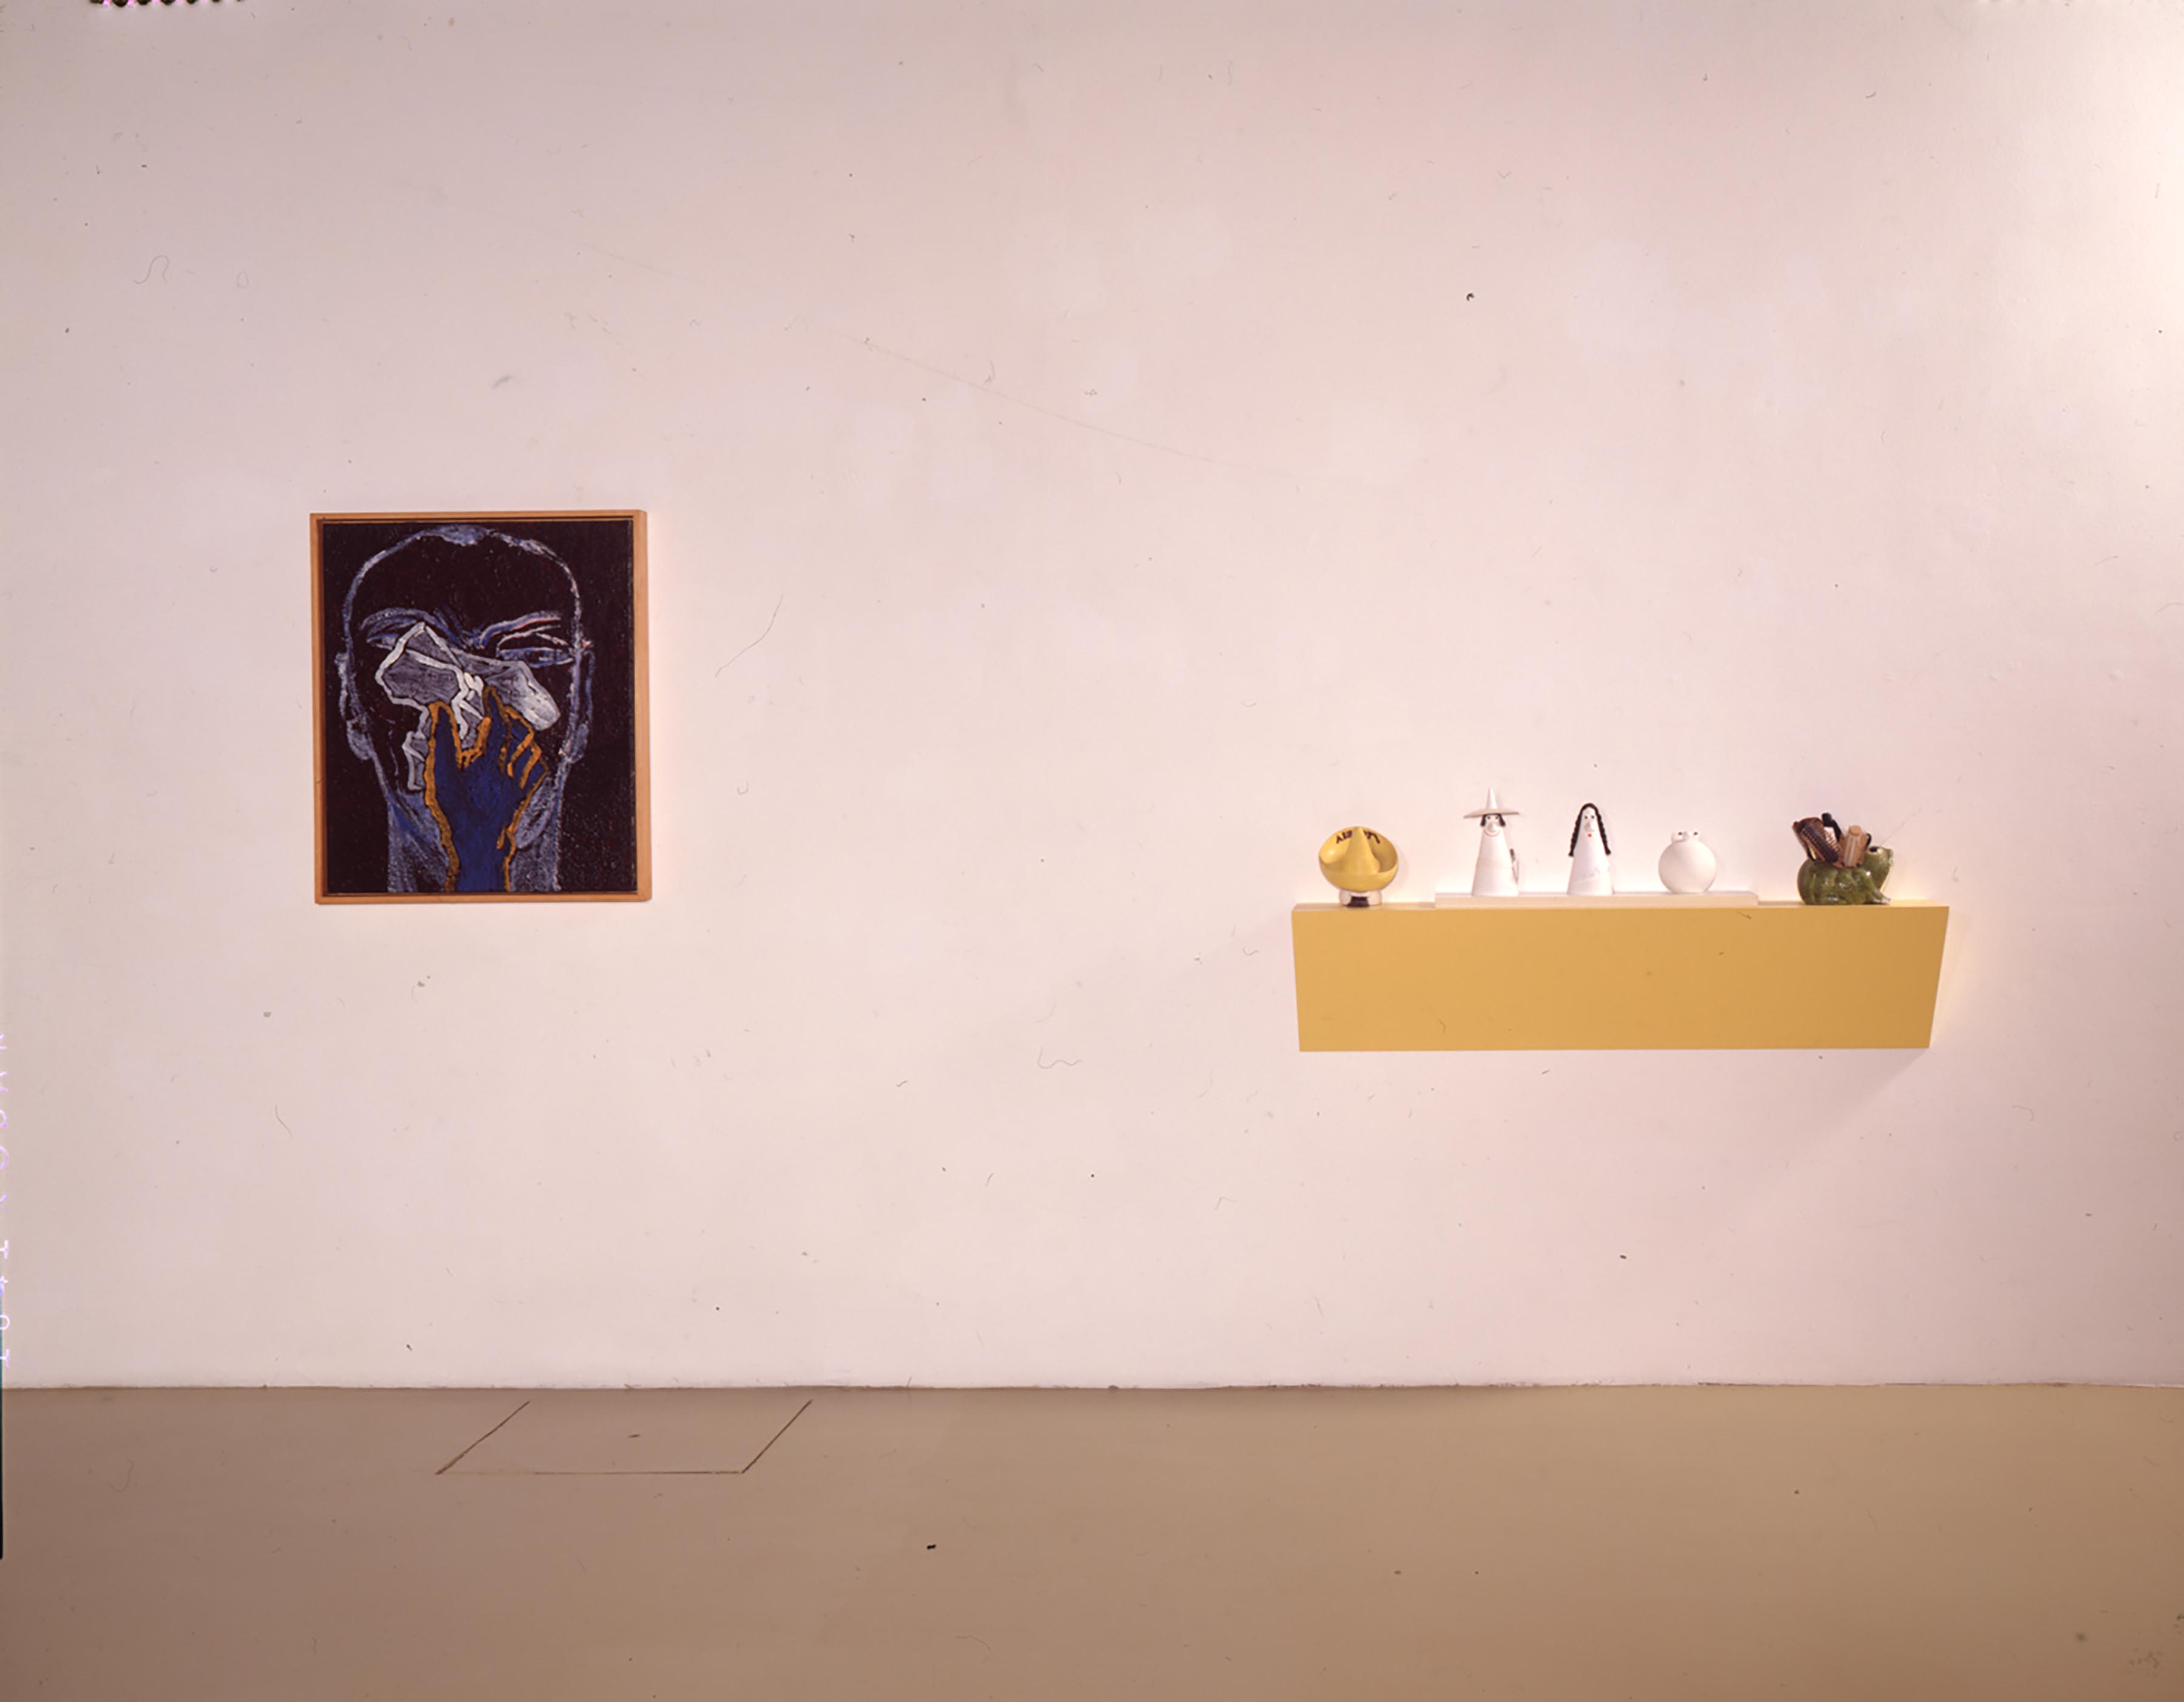 Haim Steinbach, Omaggio a Armando Testa, 1995 and Francesco Clemente, Untitled, 1981